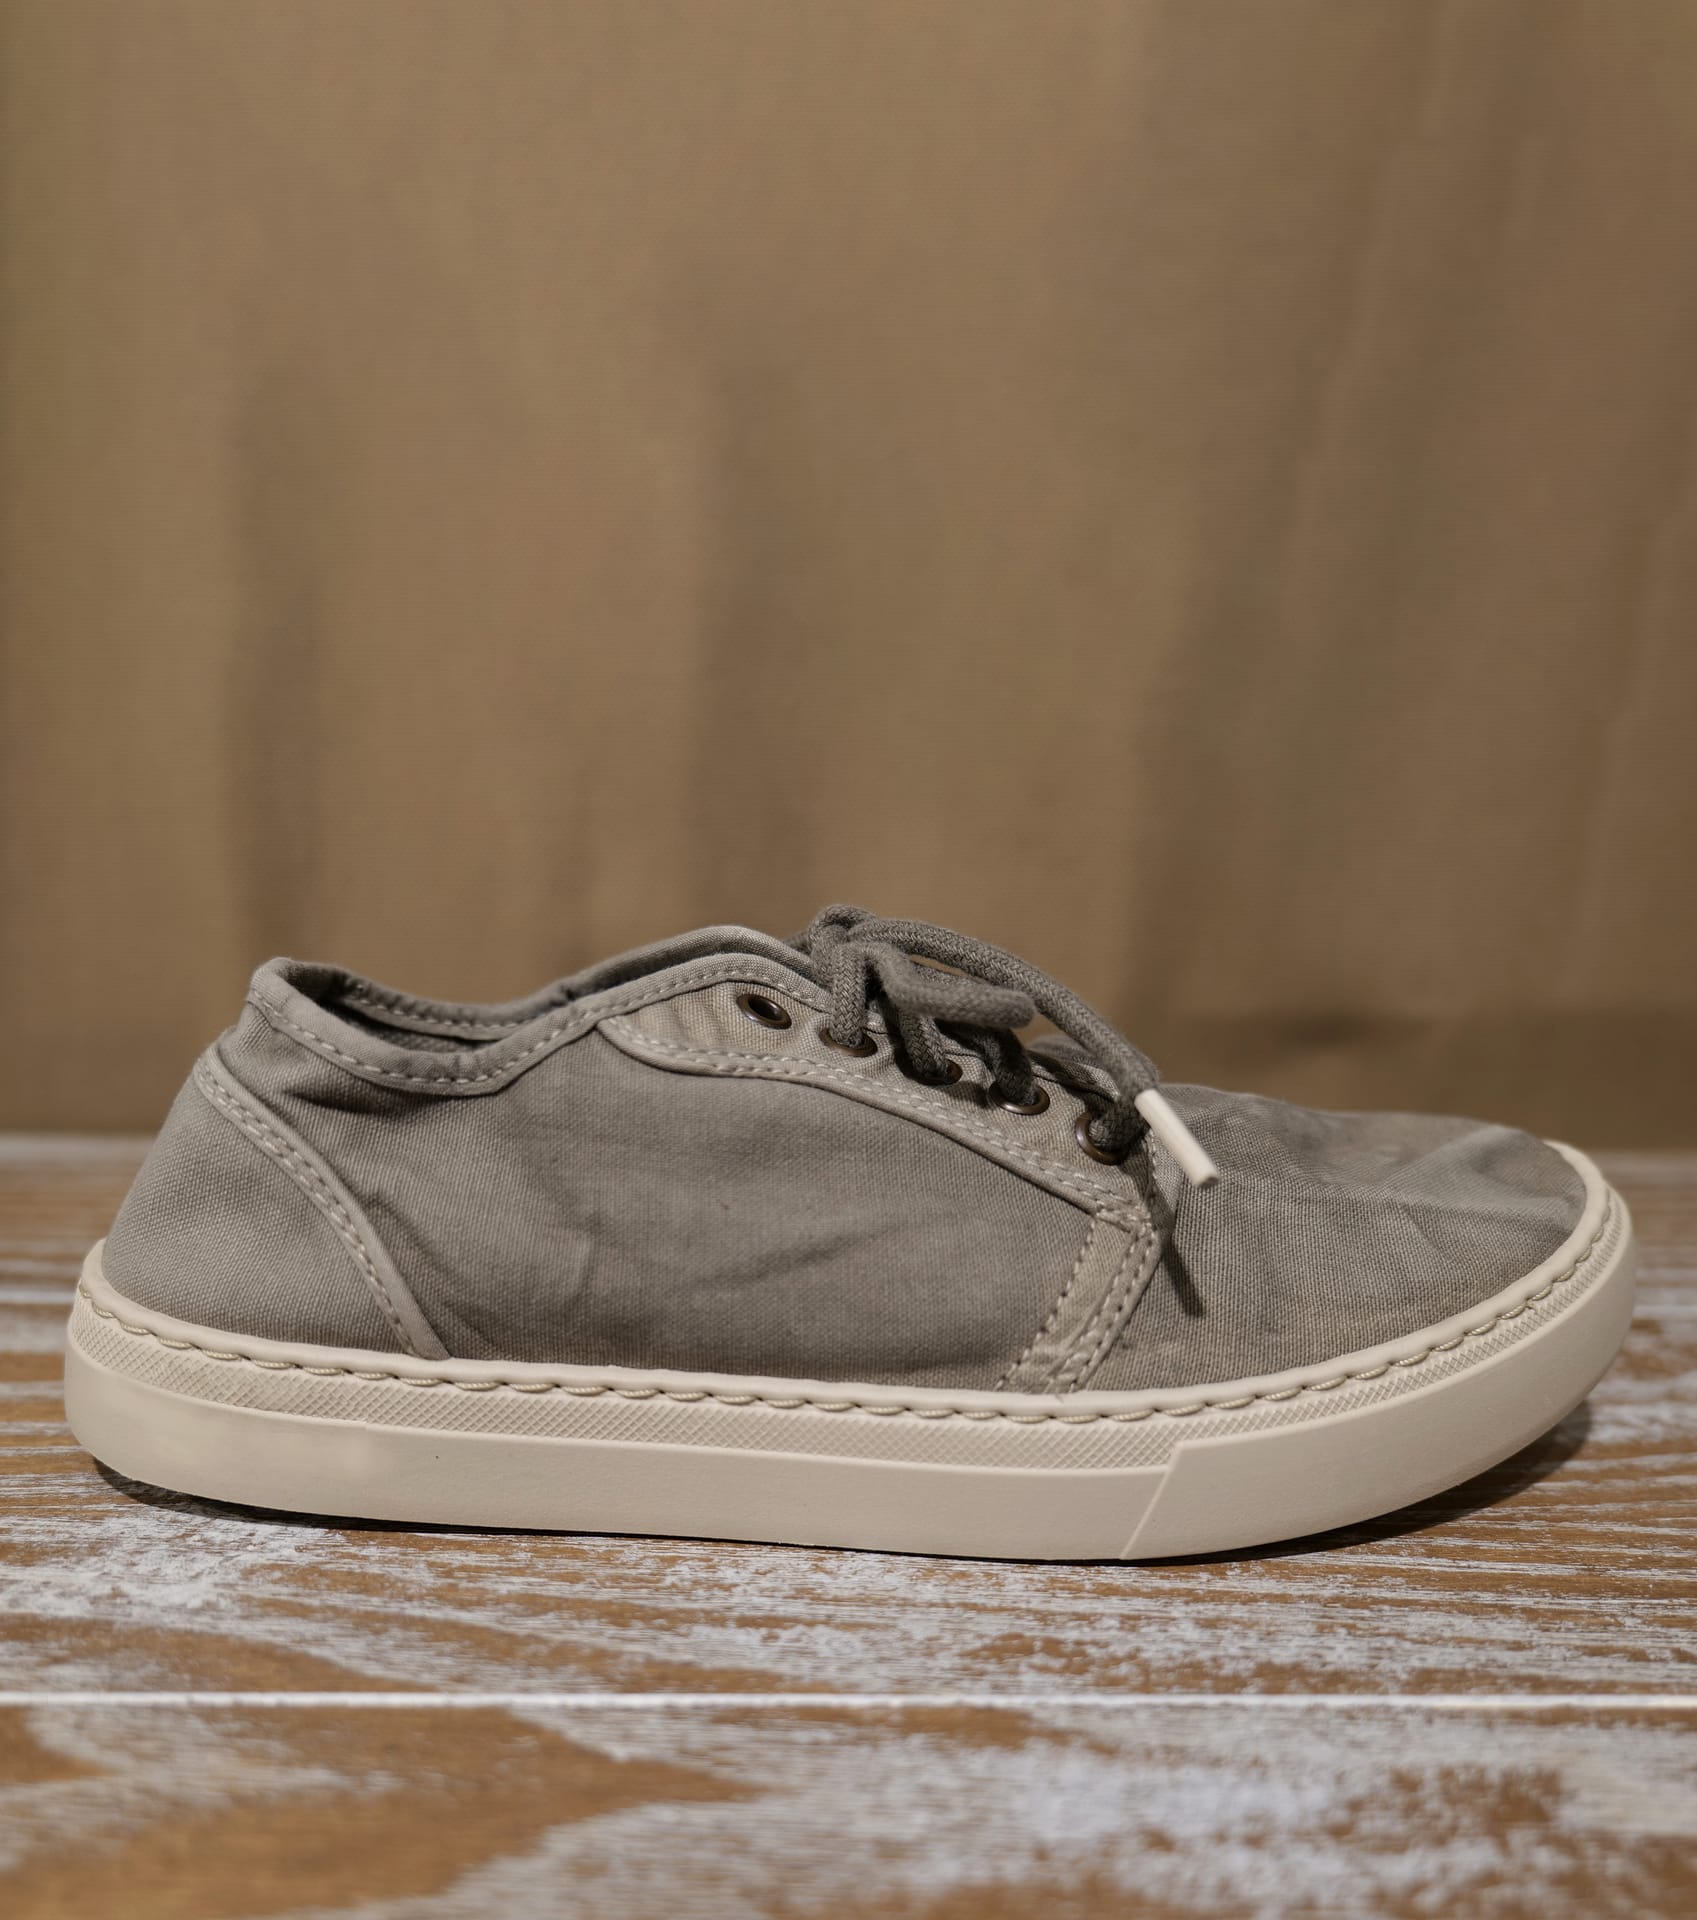 Chaussure basket gris clair externe